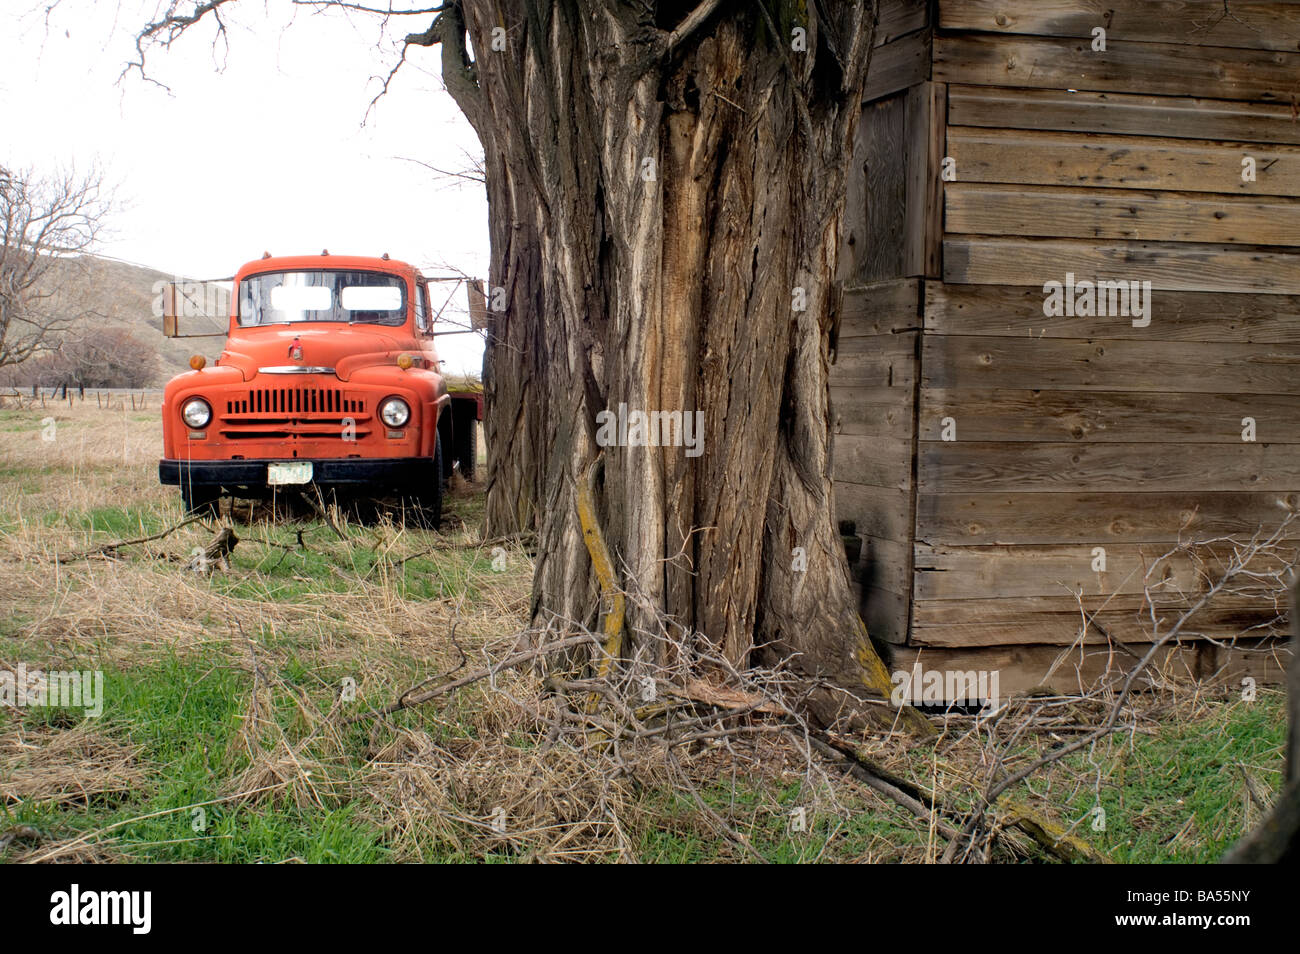 International harvester Truck on Abandoned Farm Stock Photo